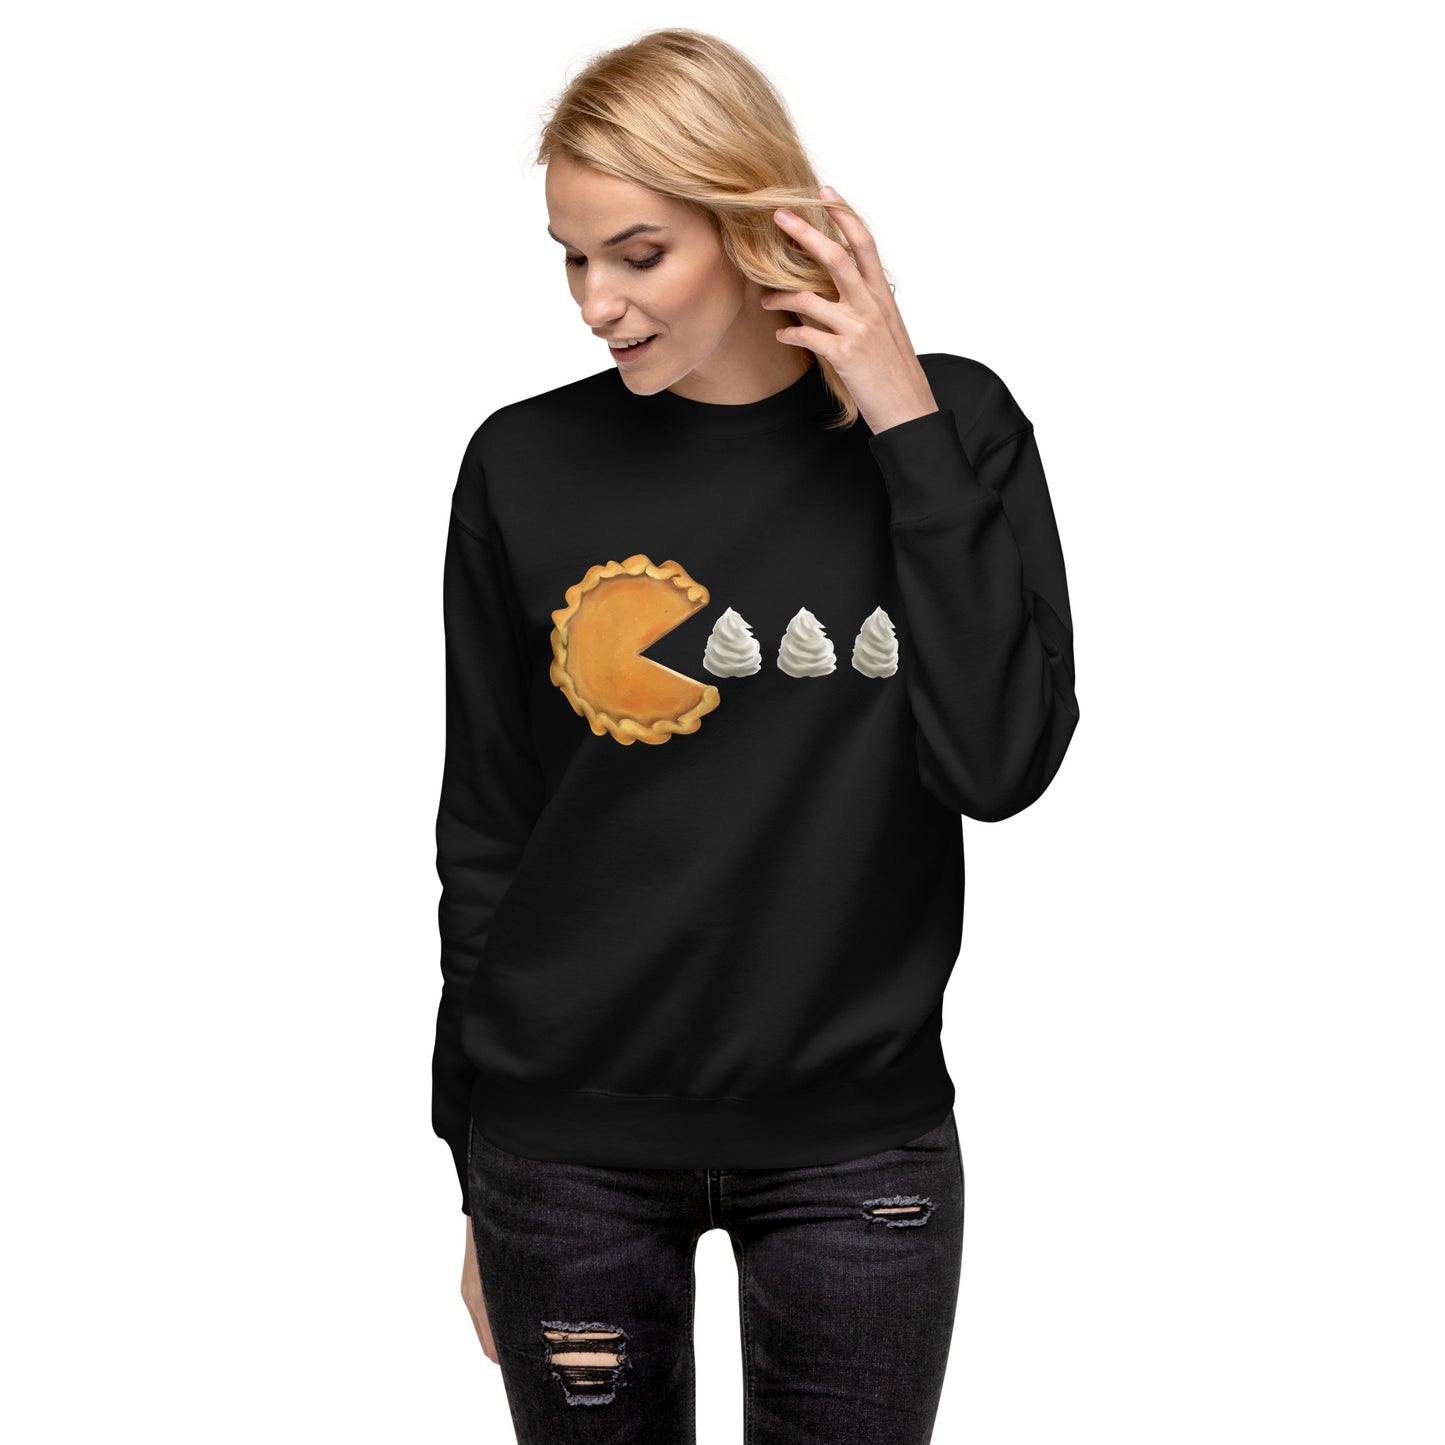 Pumpkin Man Thanksgiving Holiday Unisex Premium Sweatshirt